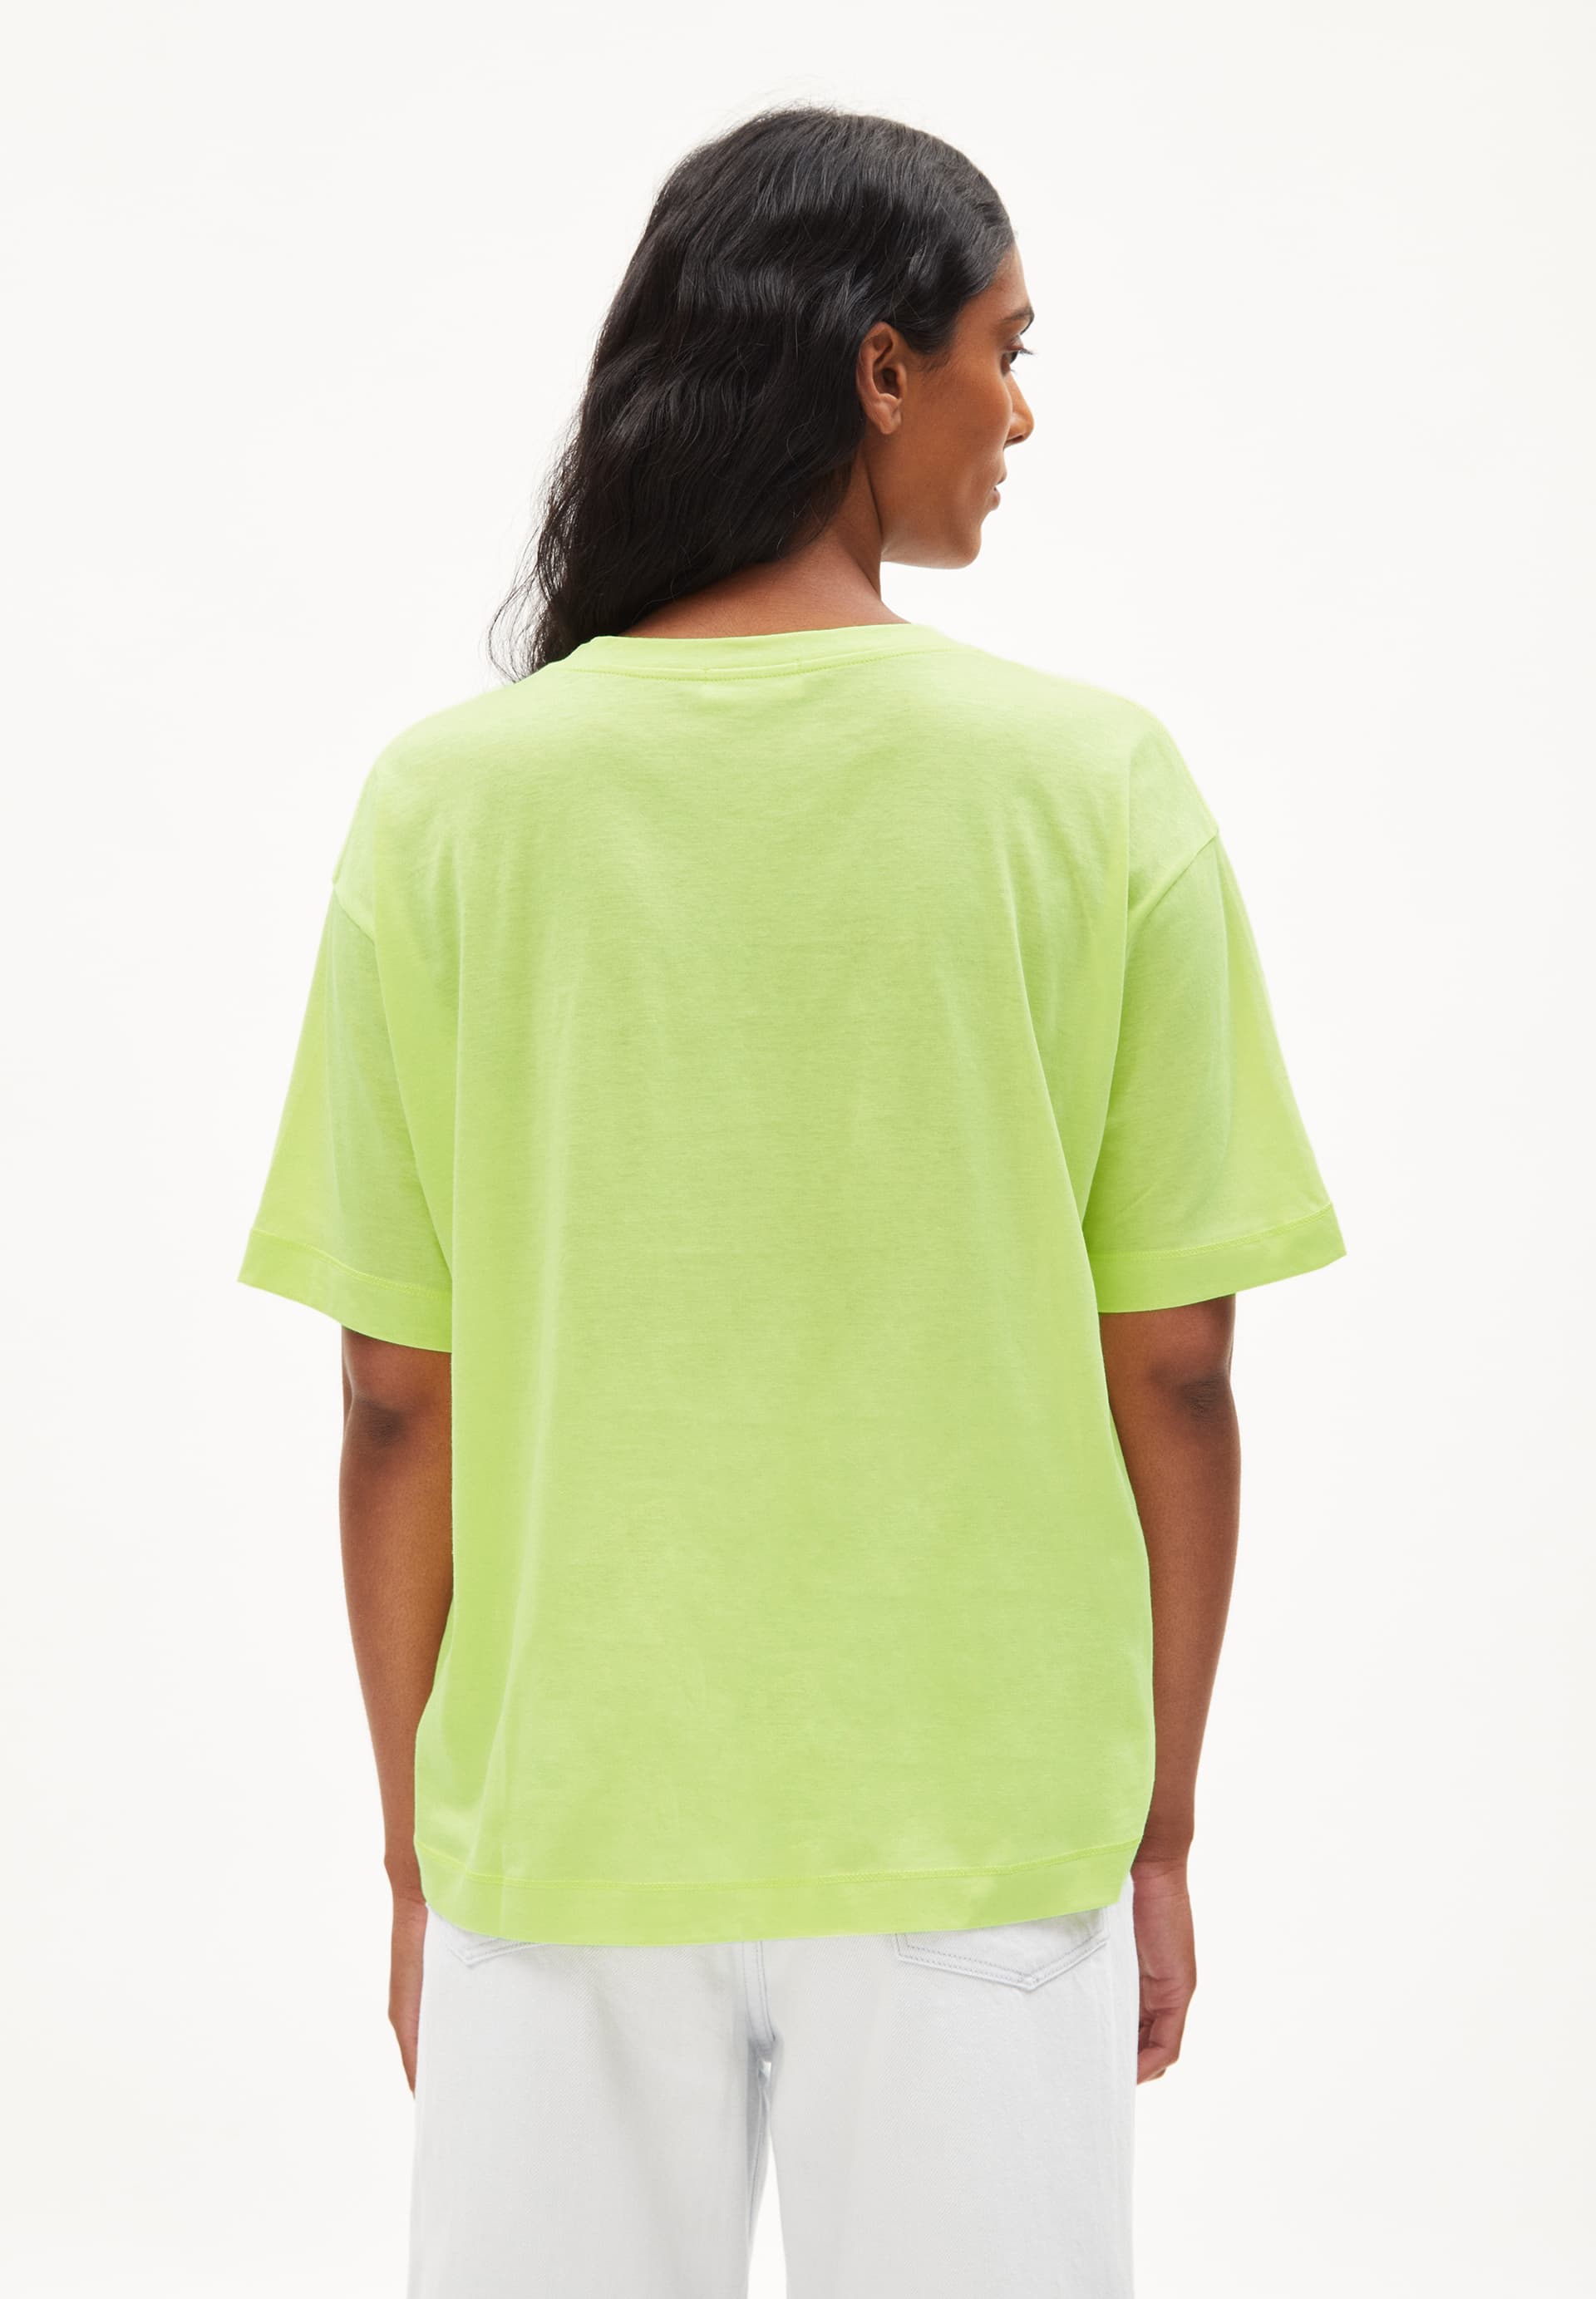 DEMIKAA T-Shirt Oversized Fit aus Bio-Baumwolle